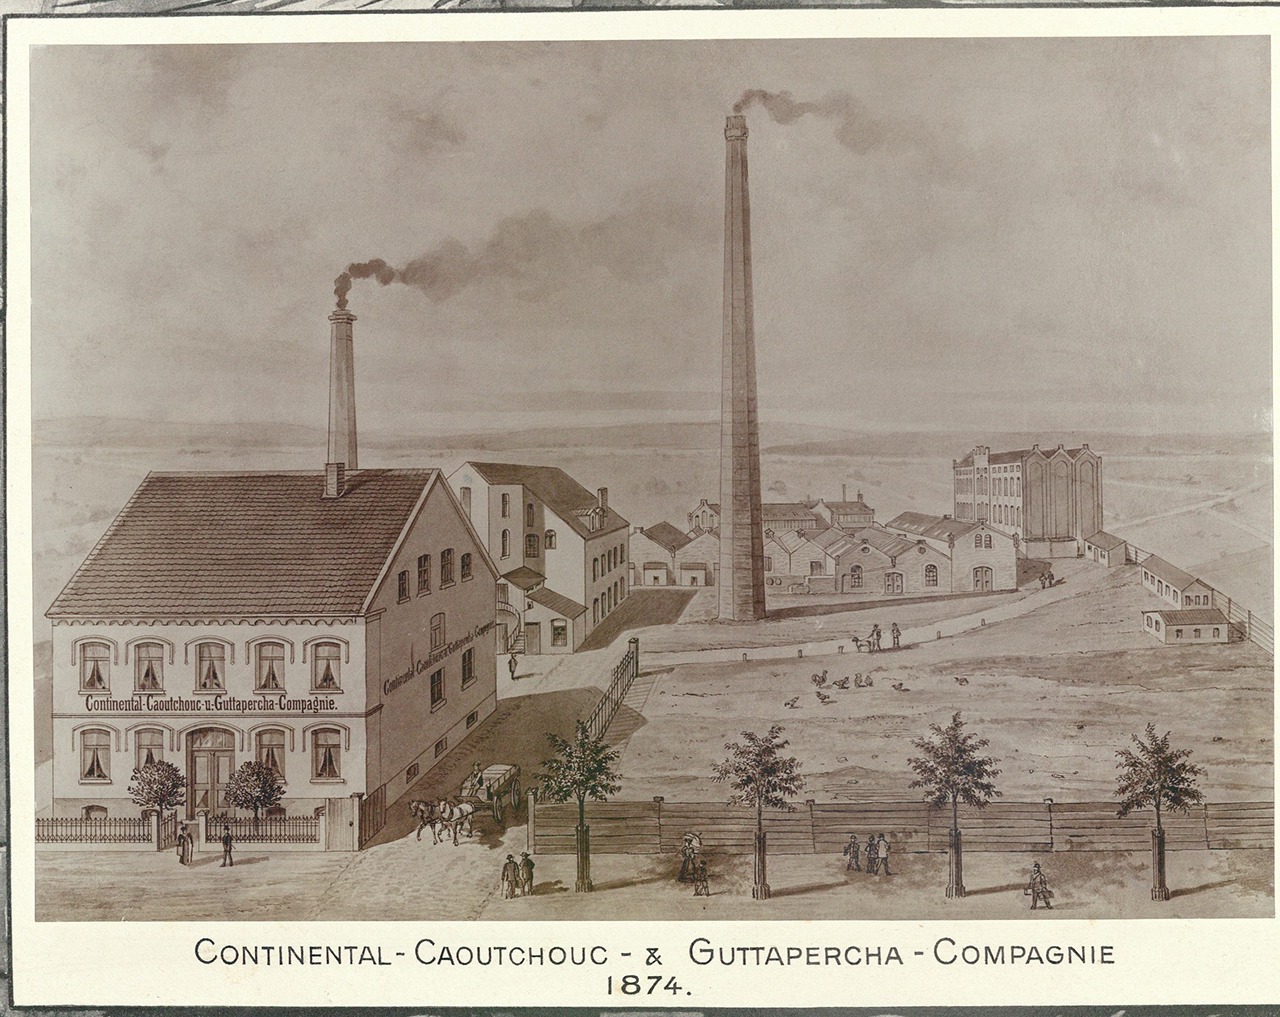 Continental Kautschuk & Guttaperka ble grunnlagt i Hannover i 1871